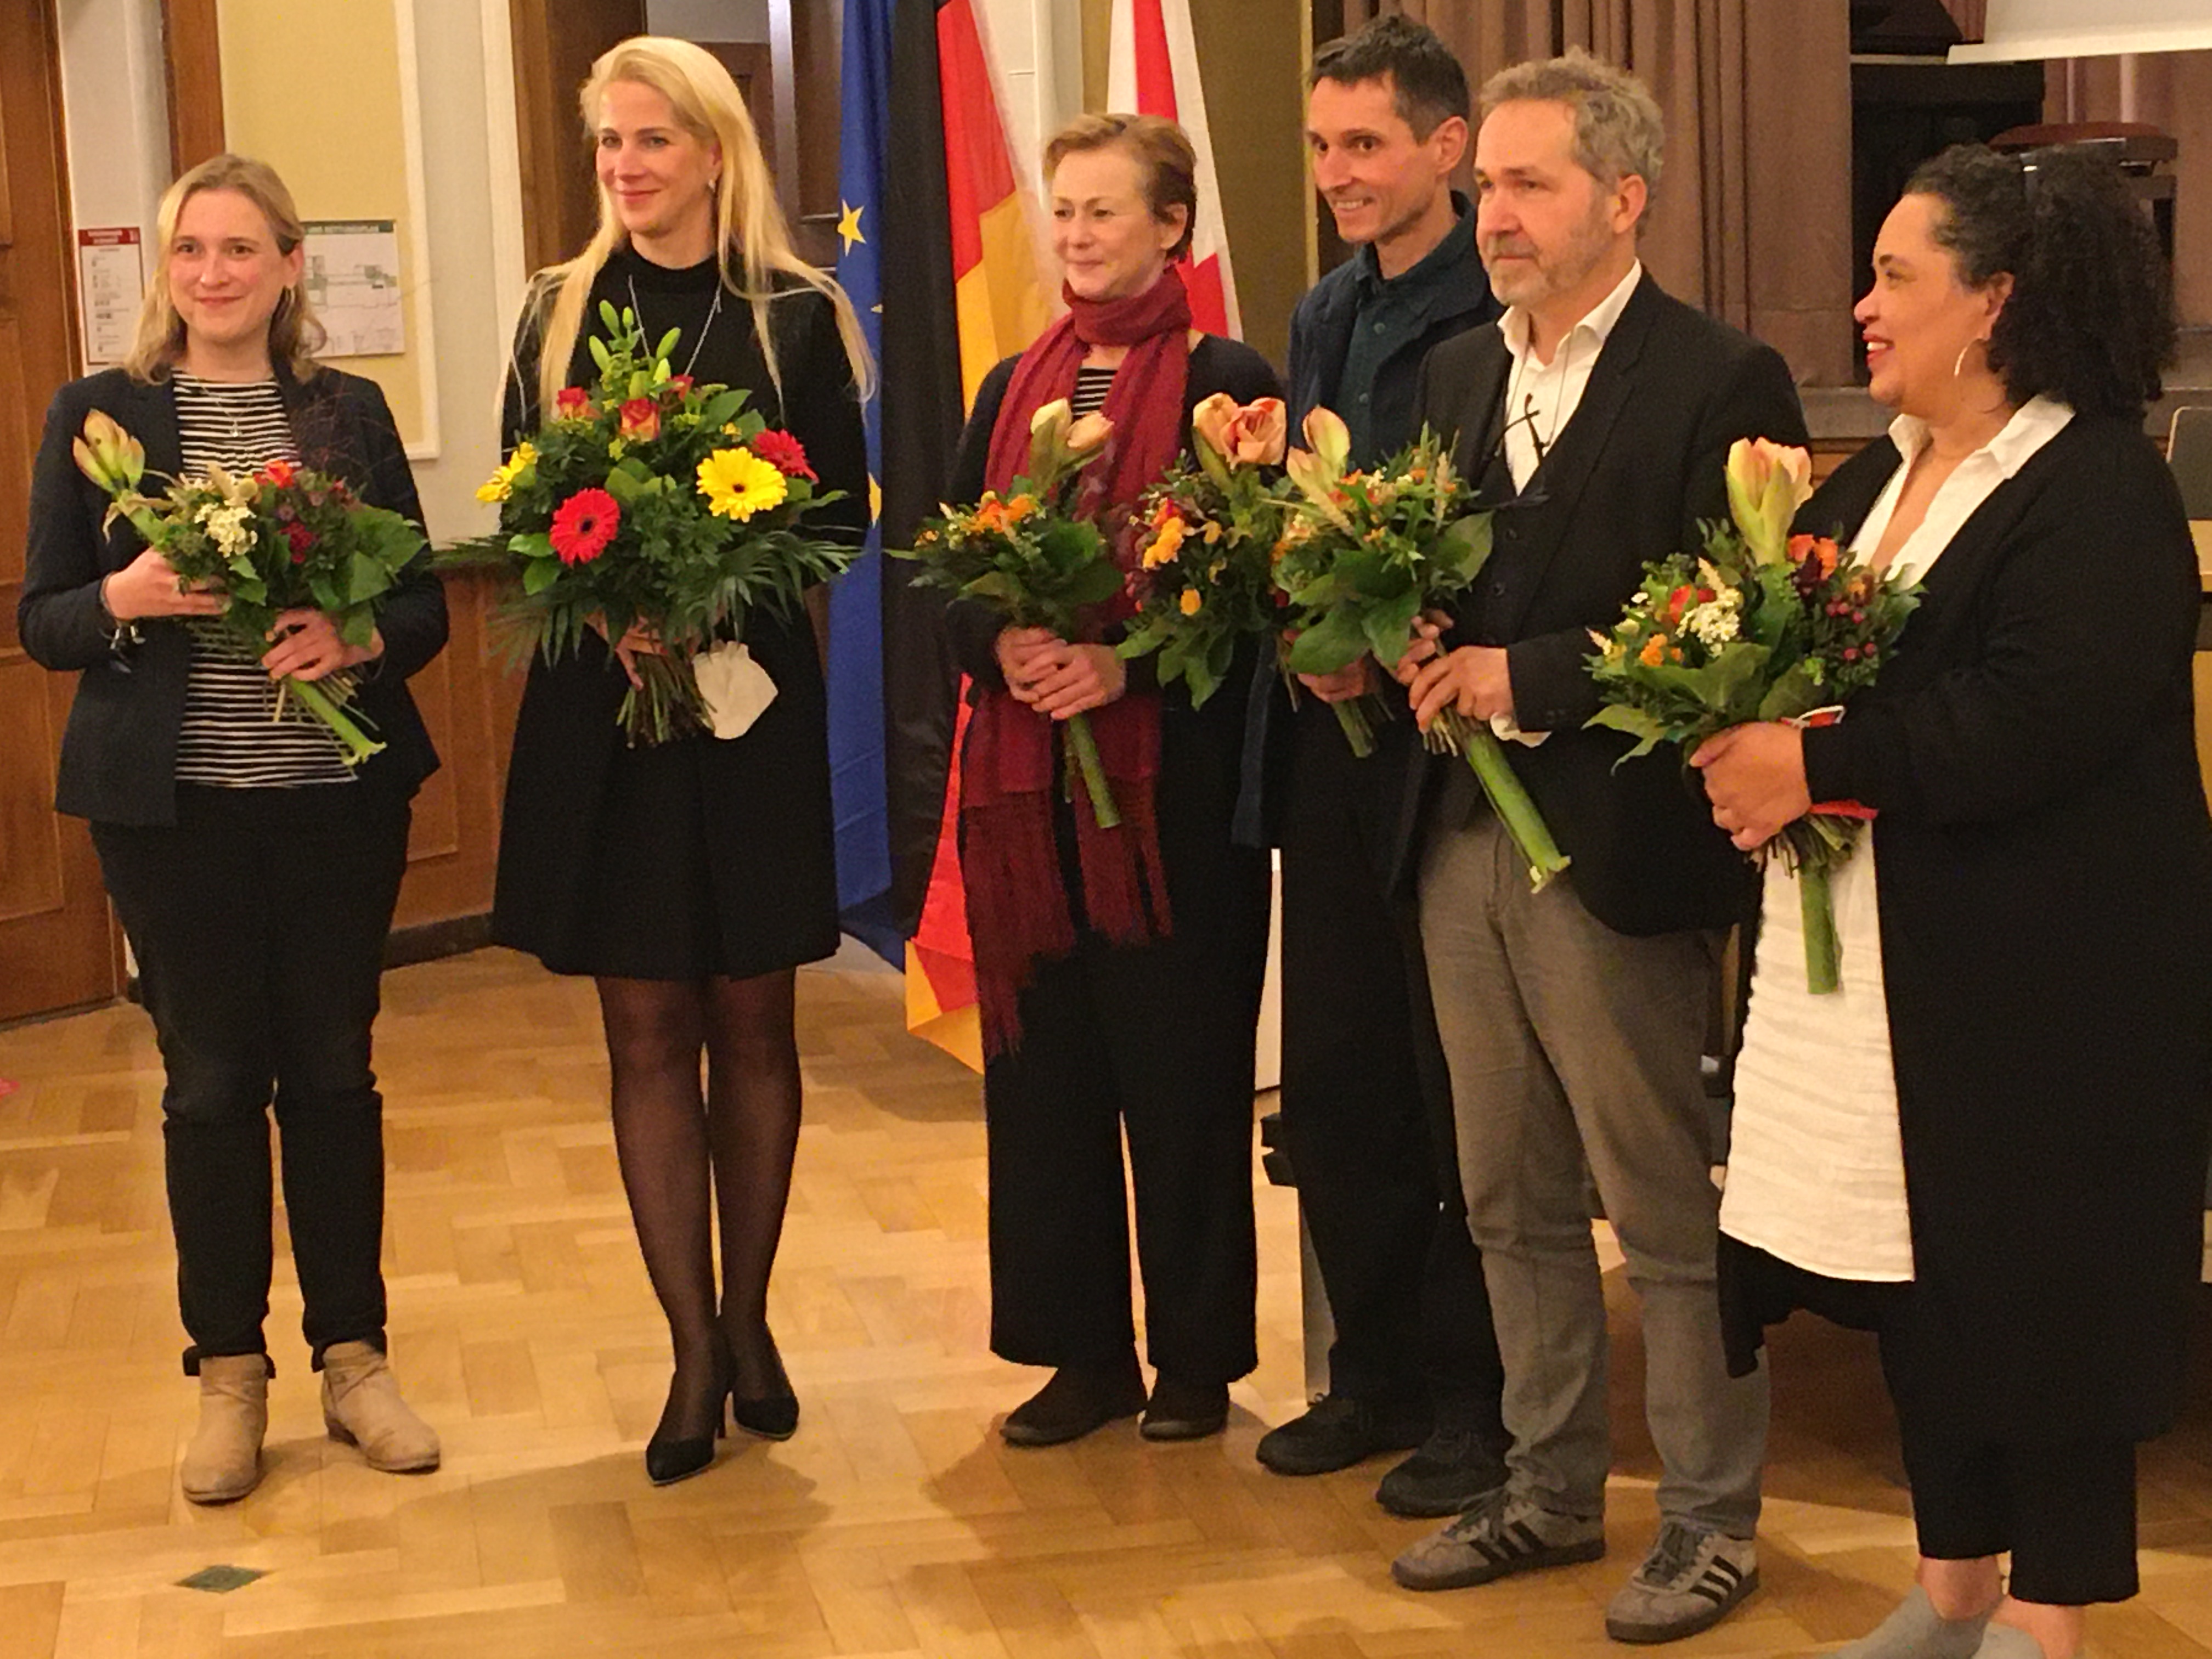 Das neue Bezirksamt (vlnr): Rona Tietje (SPD), Manuela Anders-Granitzky (CDU), Dr. Cordelia Koch (Grüne), Cornelius Bechtler (Grüne), Sören Benn (Linke), Dominque Krössin (Linke)